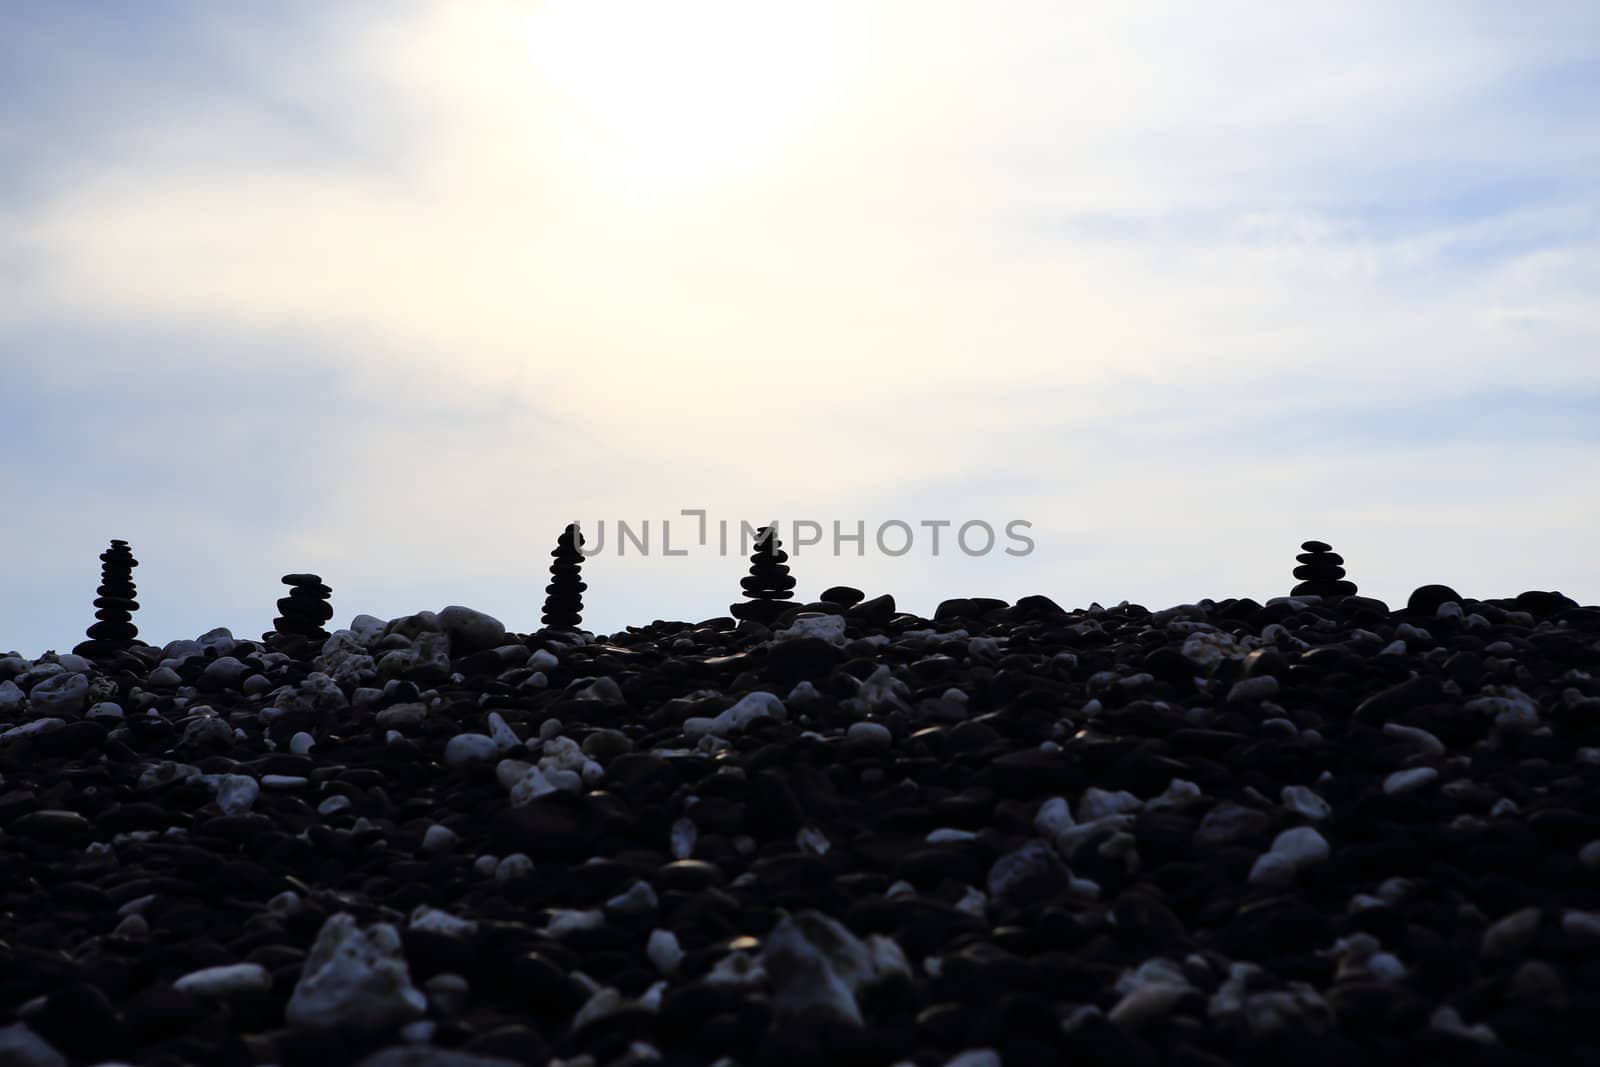 pebble on island, Lipe island, Thailand by rufous